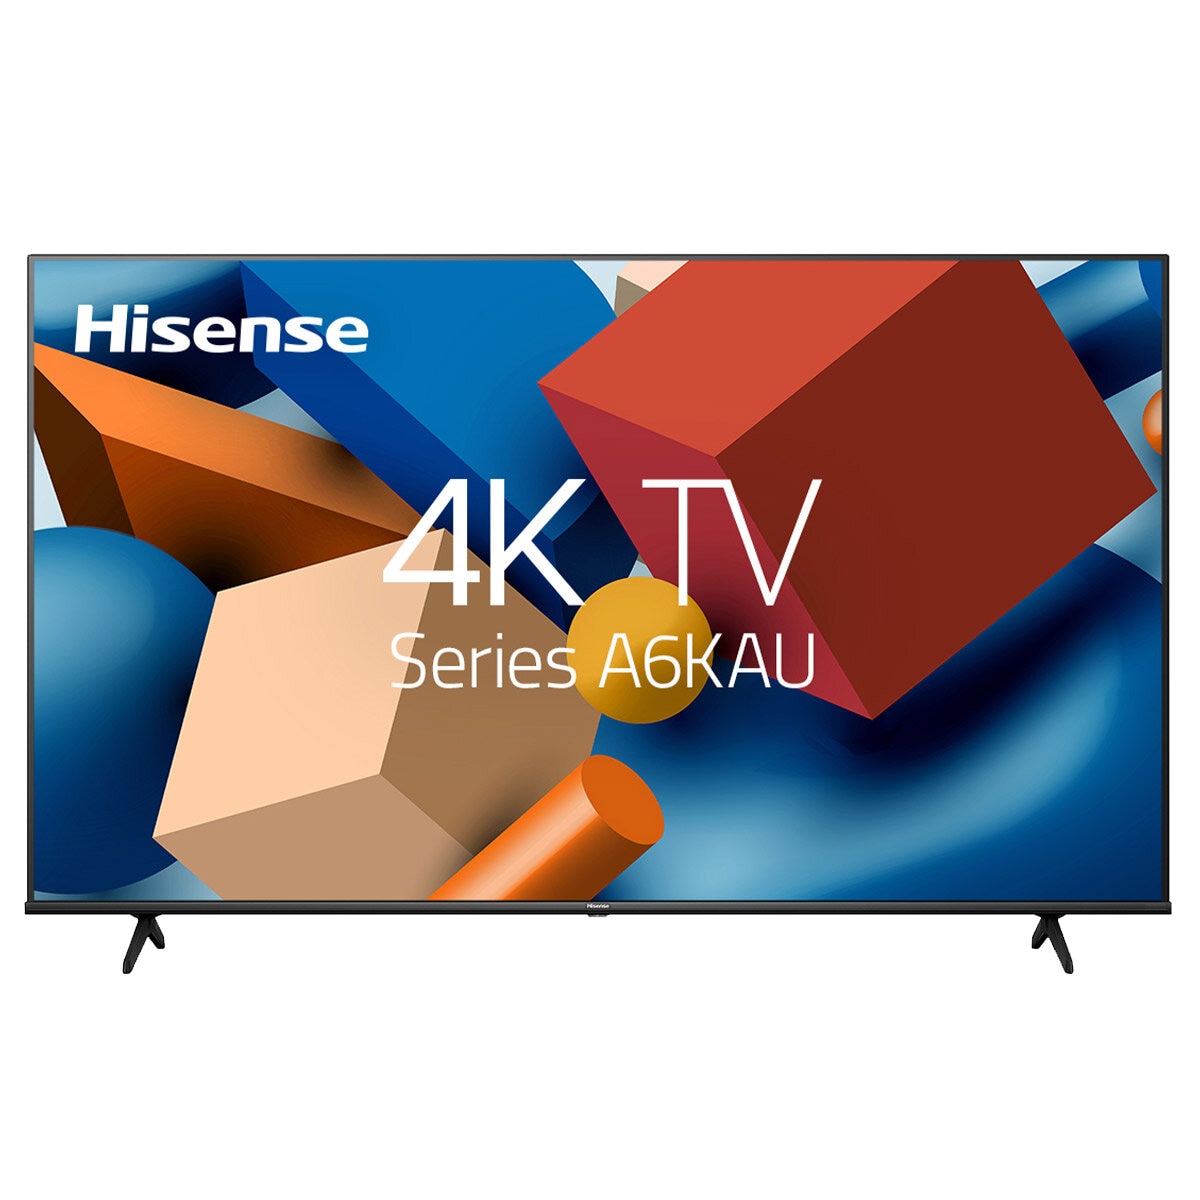 Hisense 58 Inch 4K UHD Smart TV 58A6KAU | Costco Australia